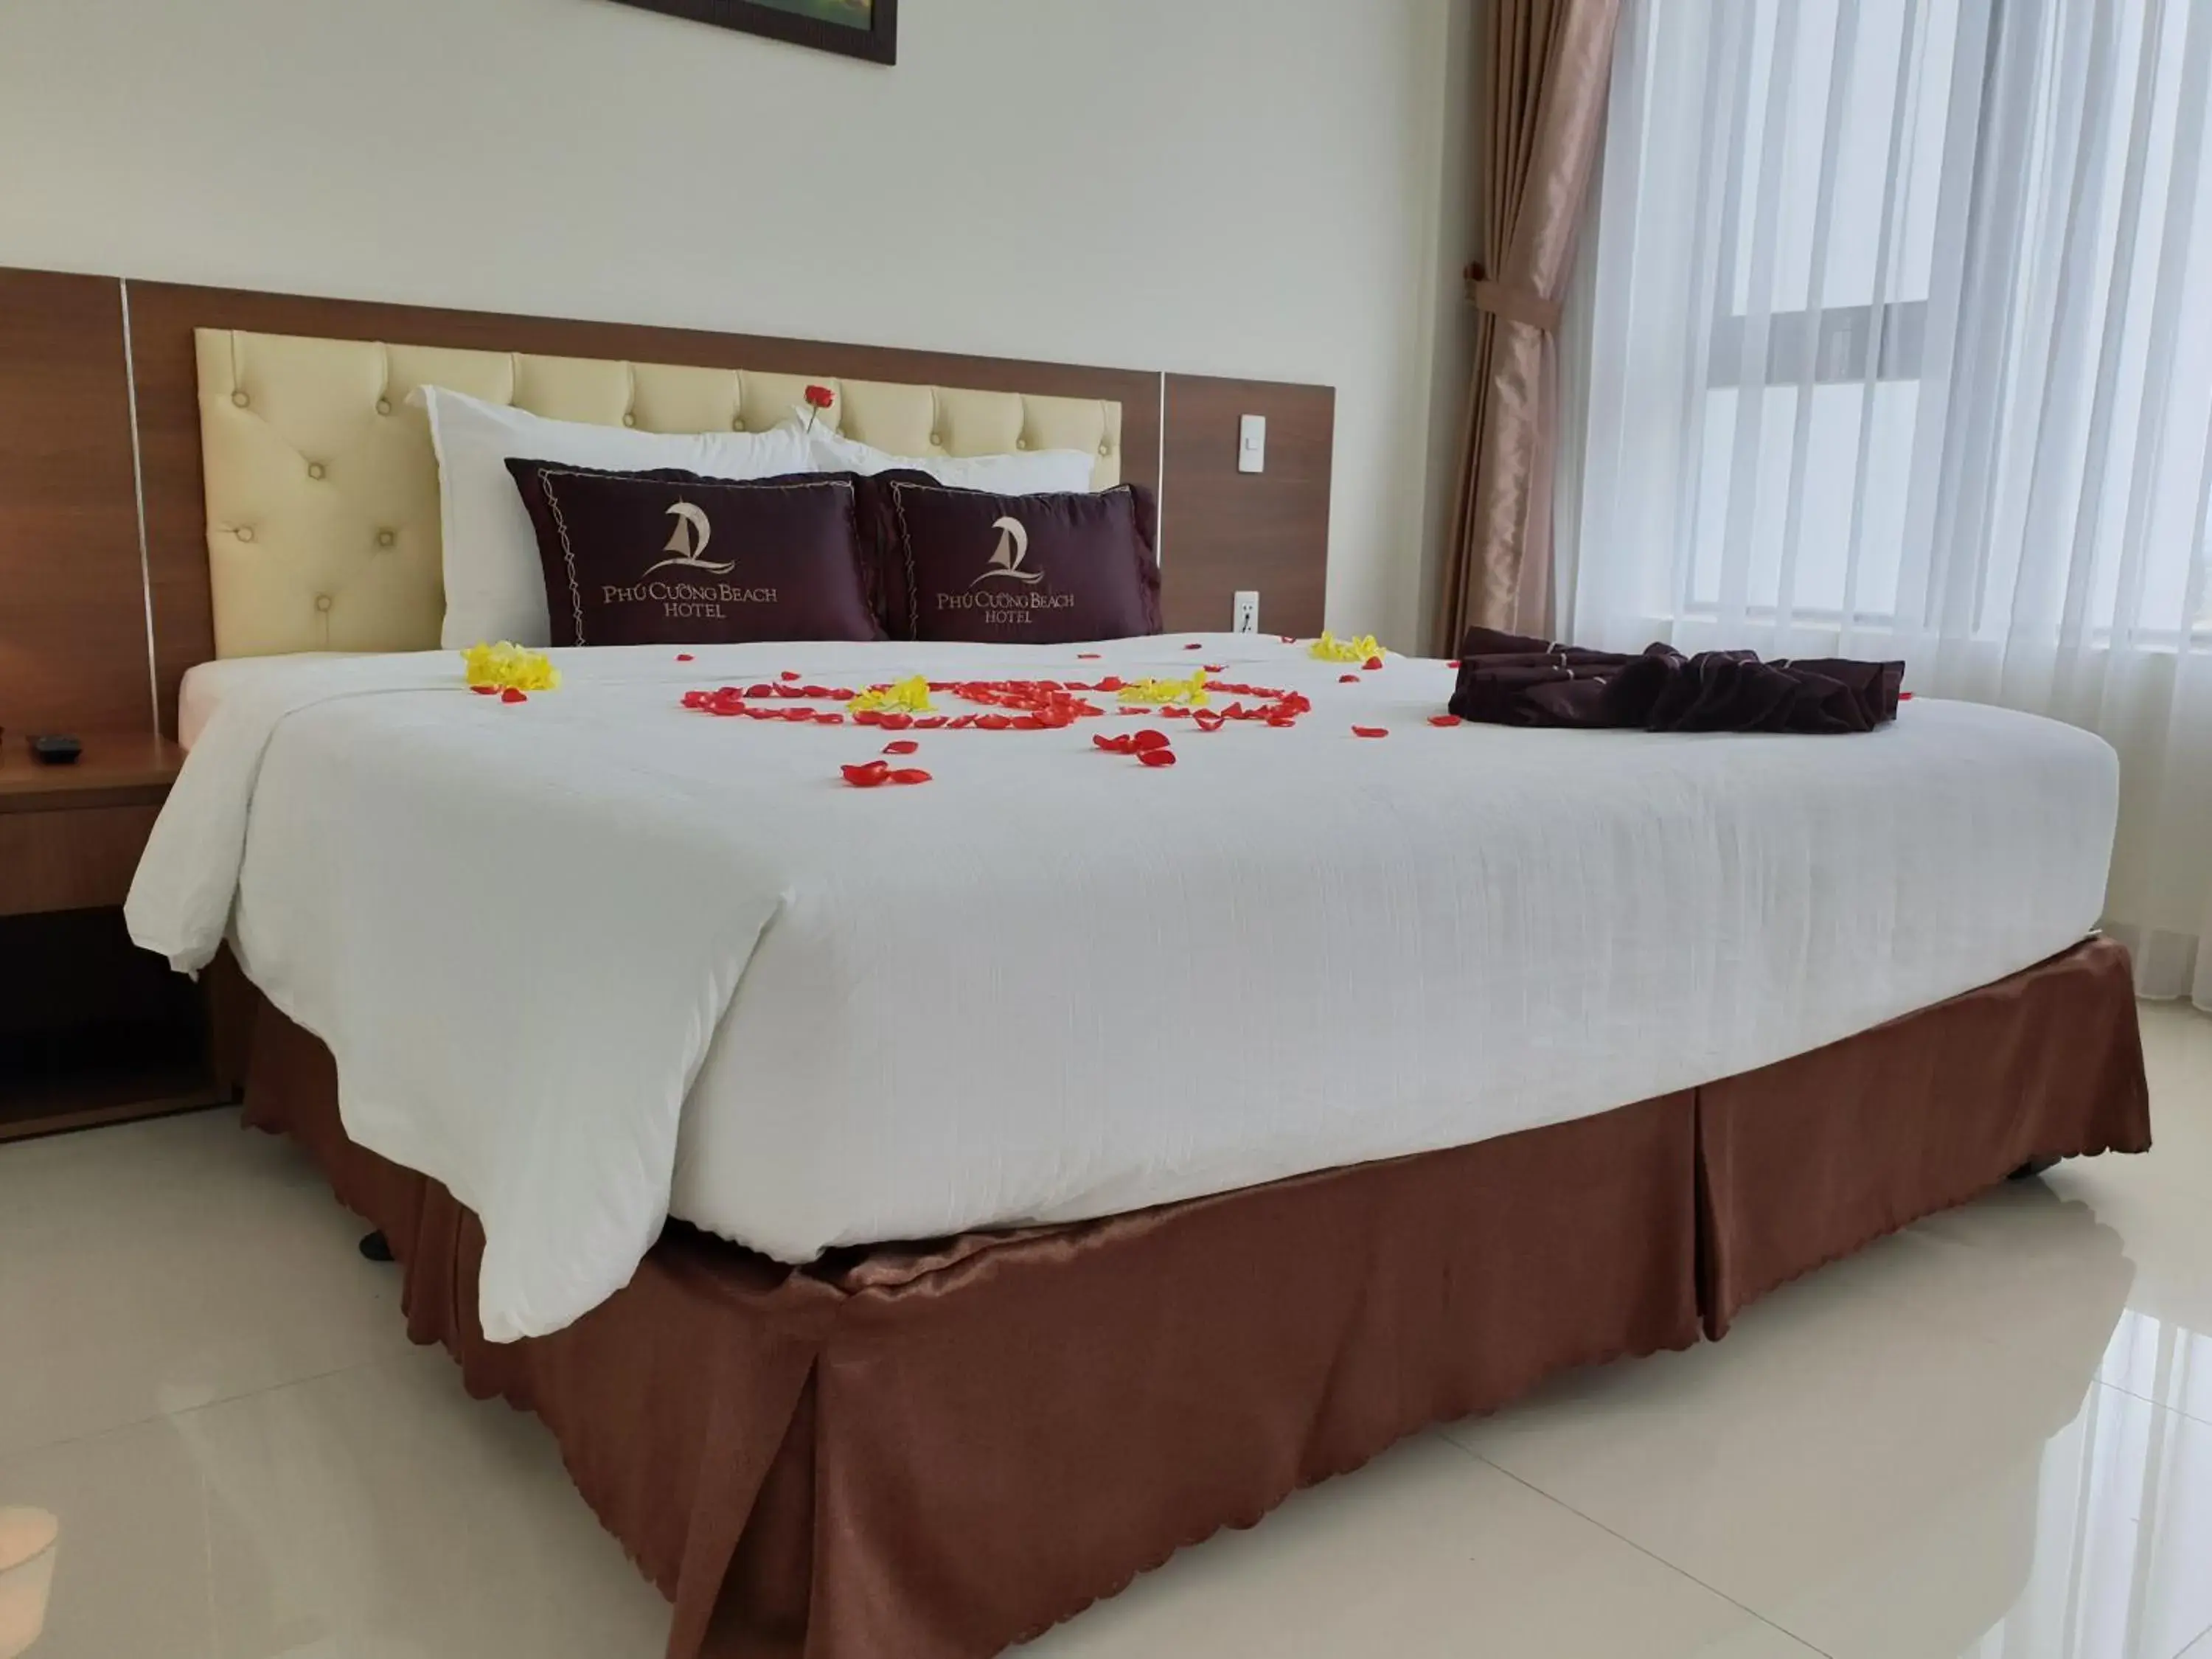 Bed in Phu Cuong Beach Hotel